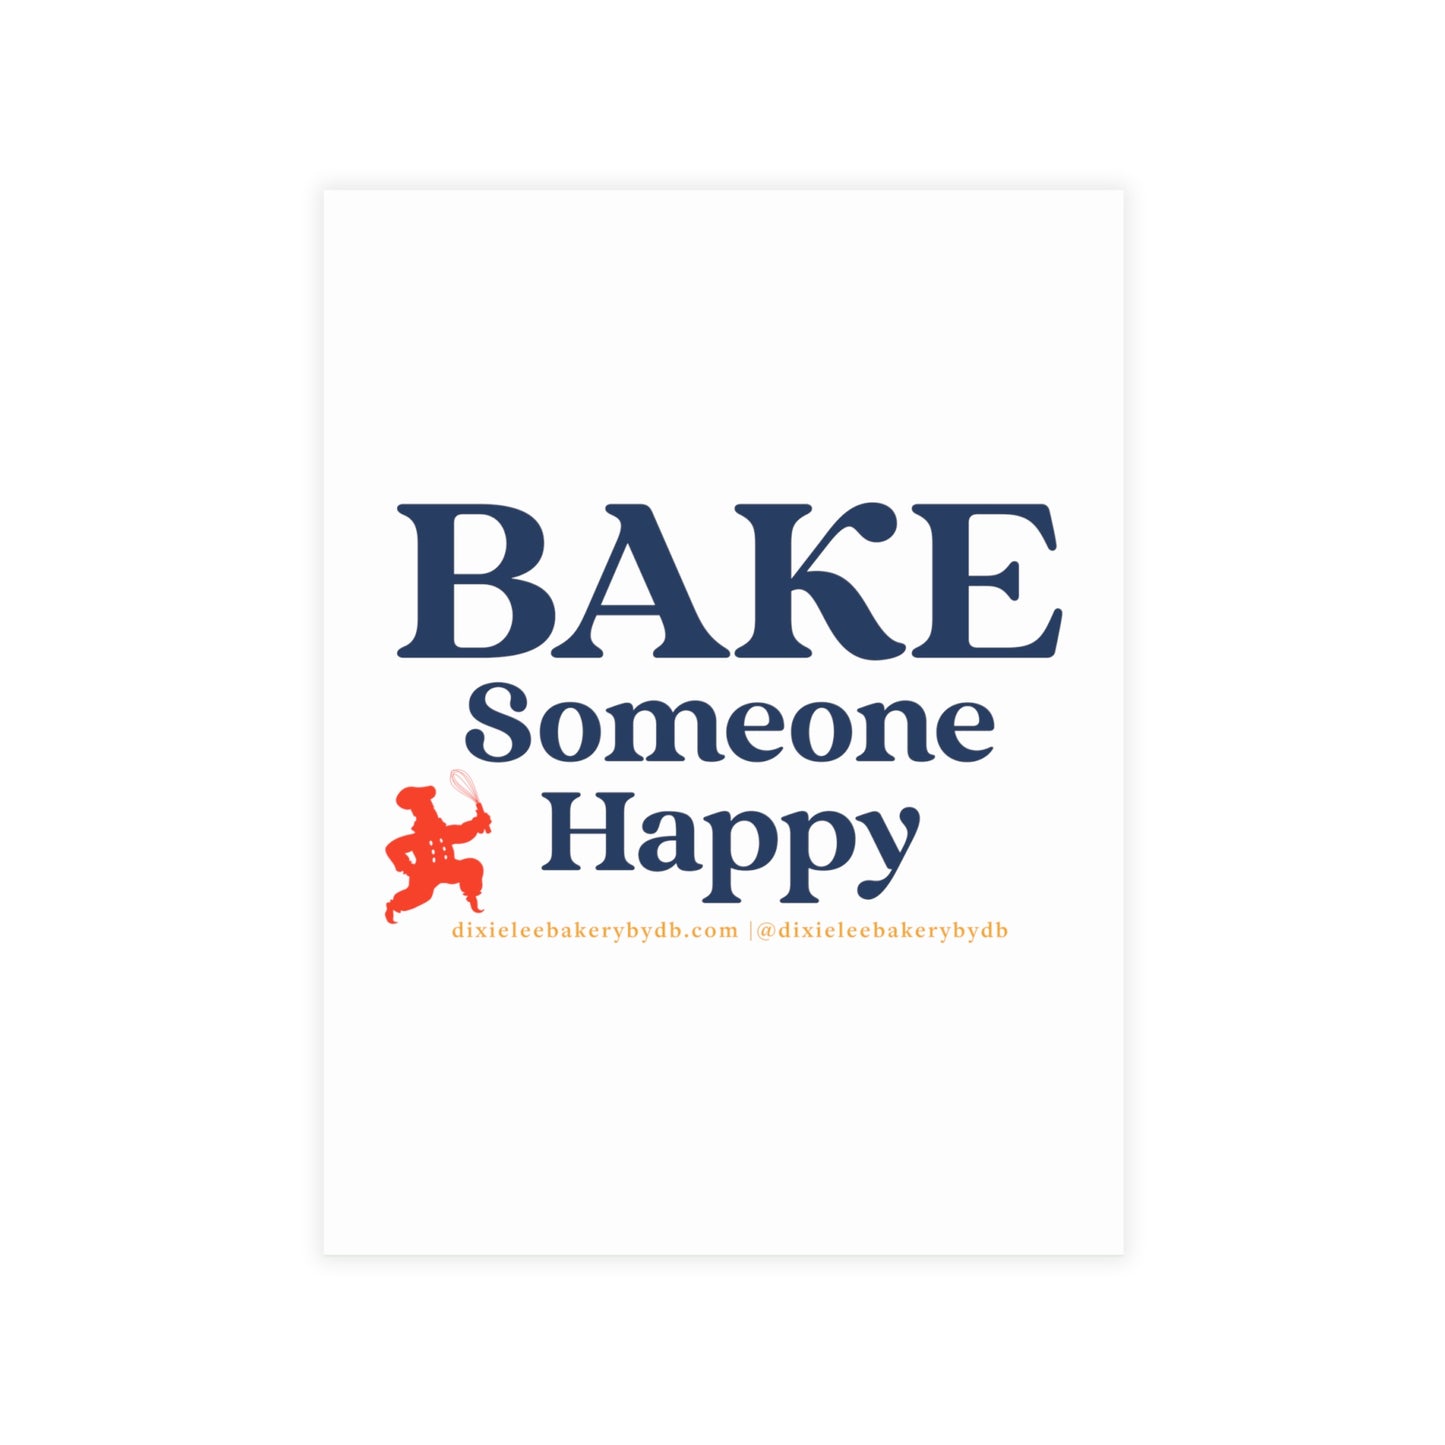 Chef David Burke "Bake Someone Happy" Postcard or Recipe Card Set